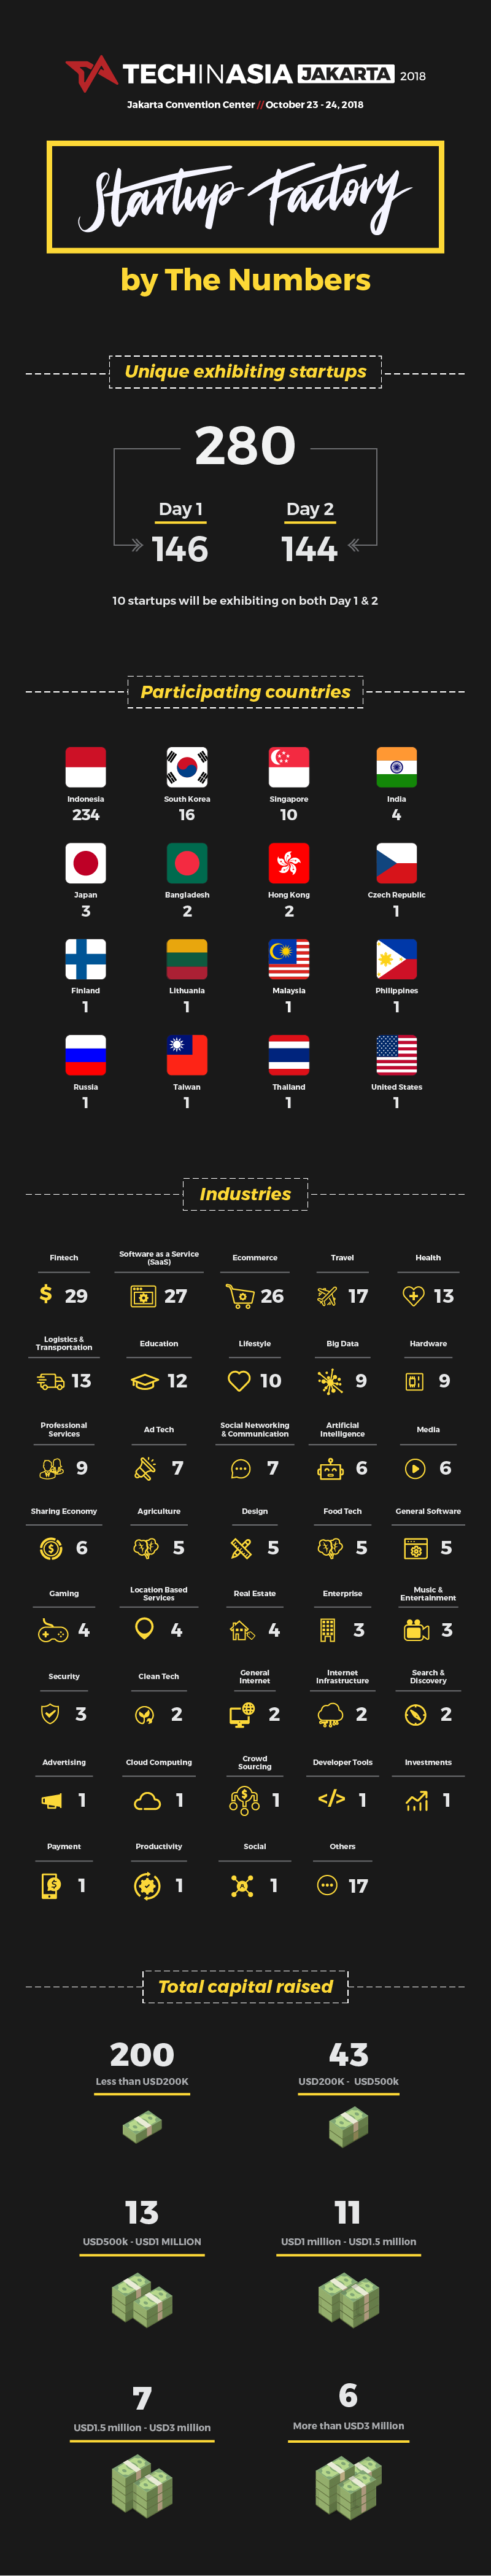 TIA Jakarta 2018 Infographic 